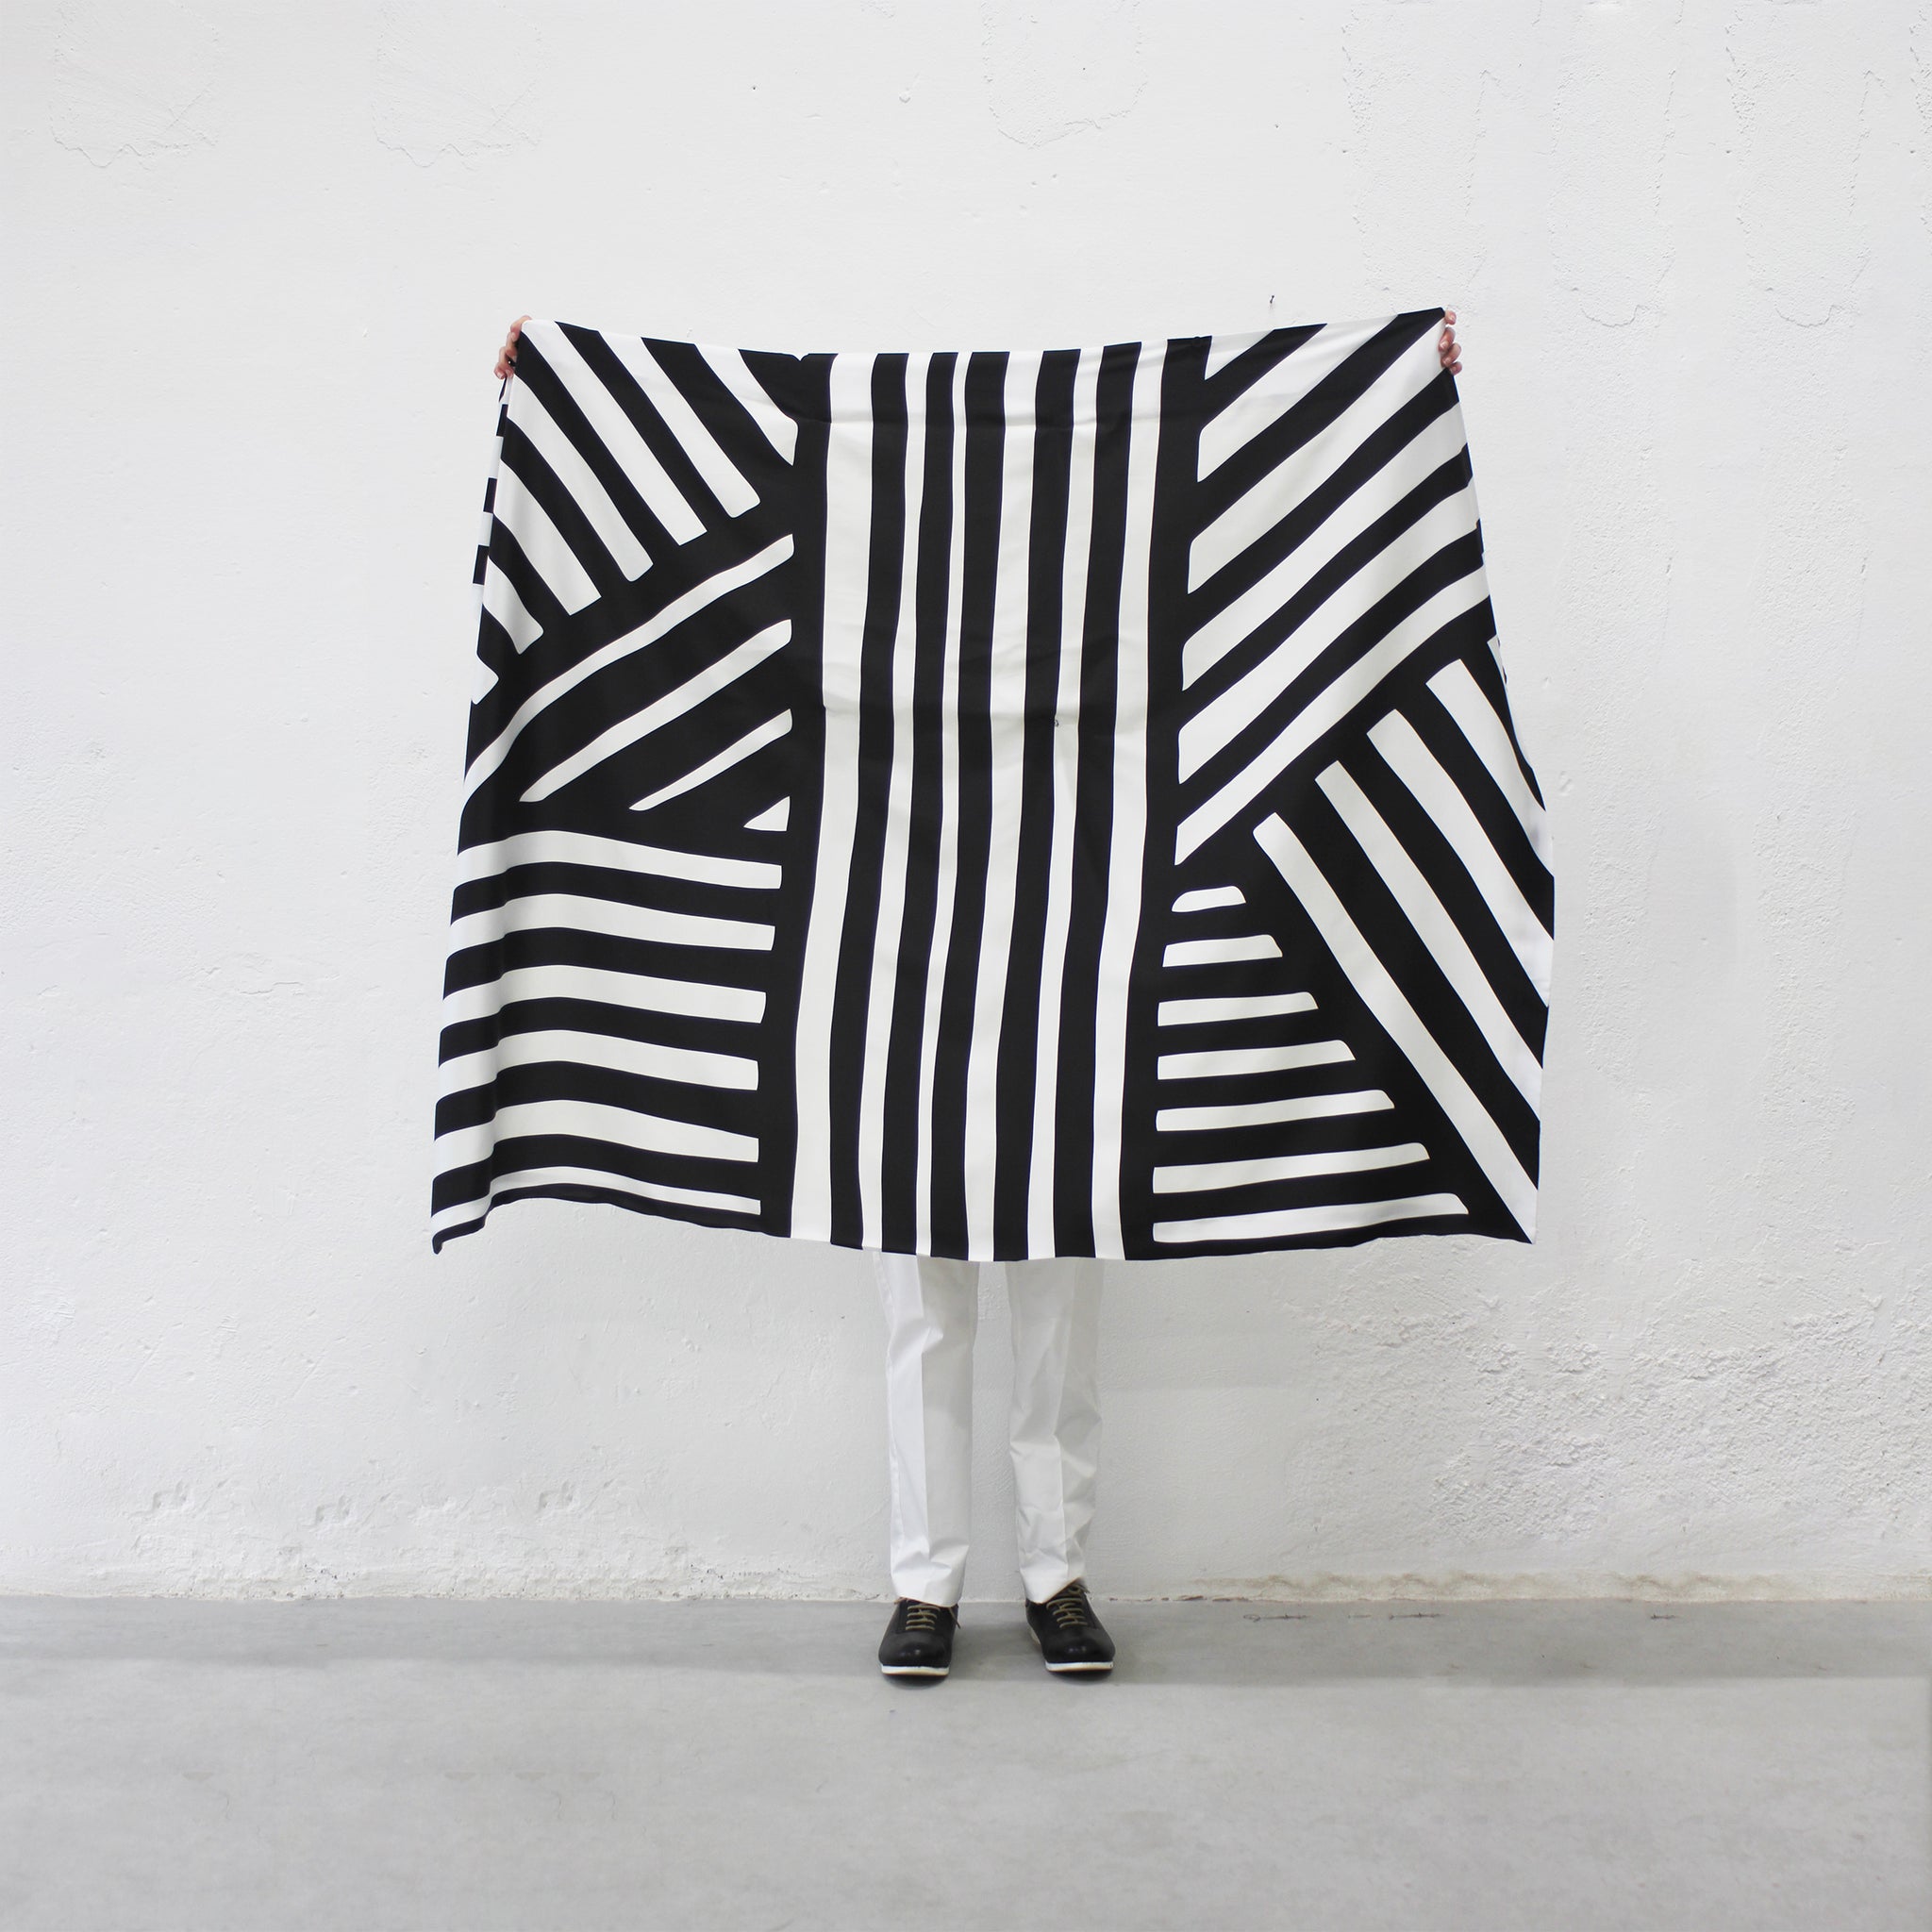 130x184CM DRESS-KET ARTWORK BY GEORGE SOWDEN